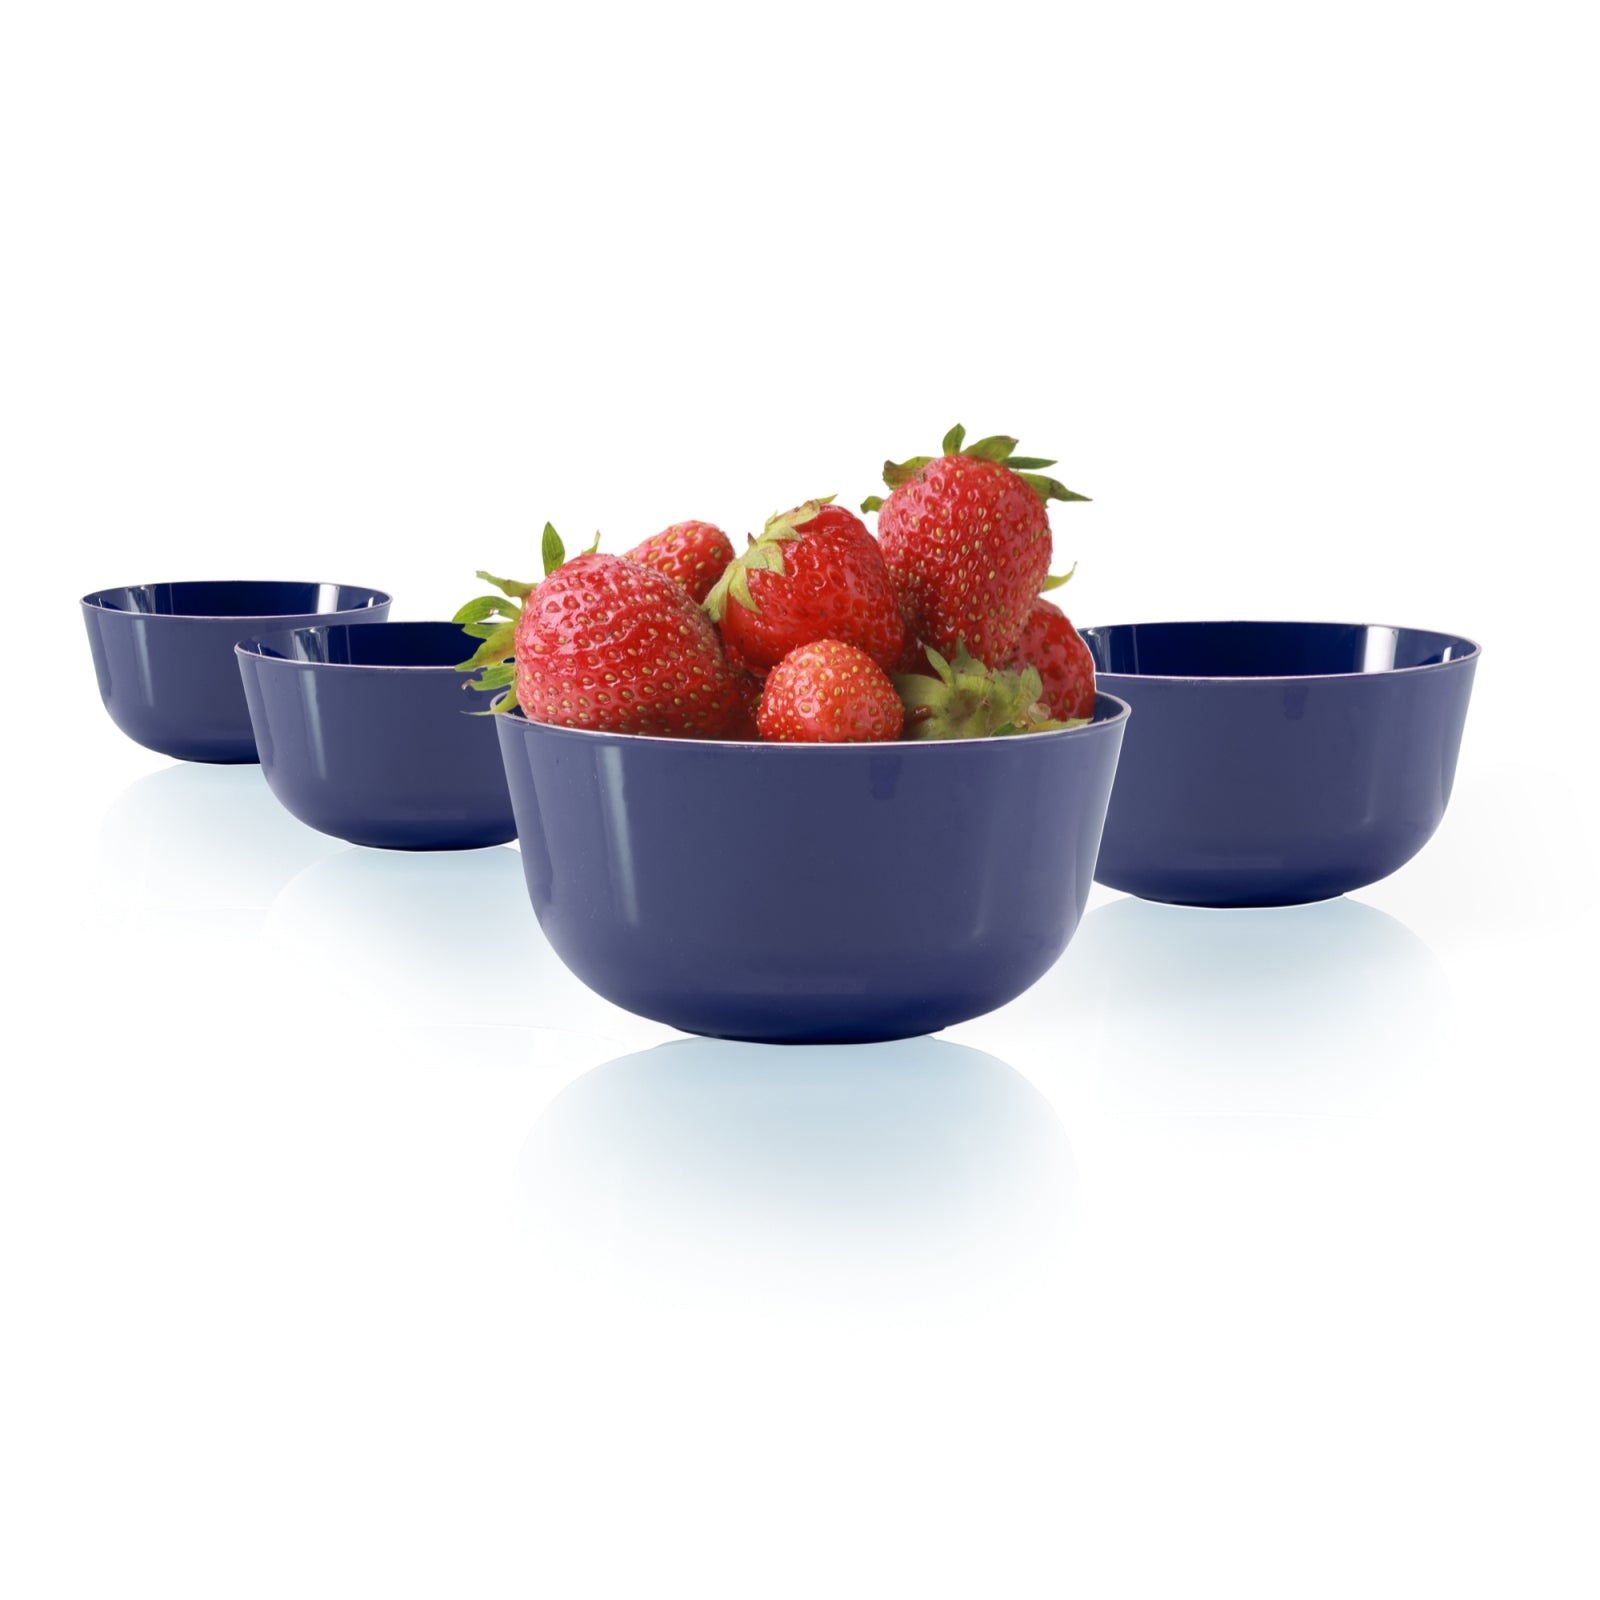 Navy Classic Design Plastic Bowls | 10 Count